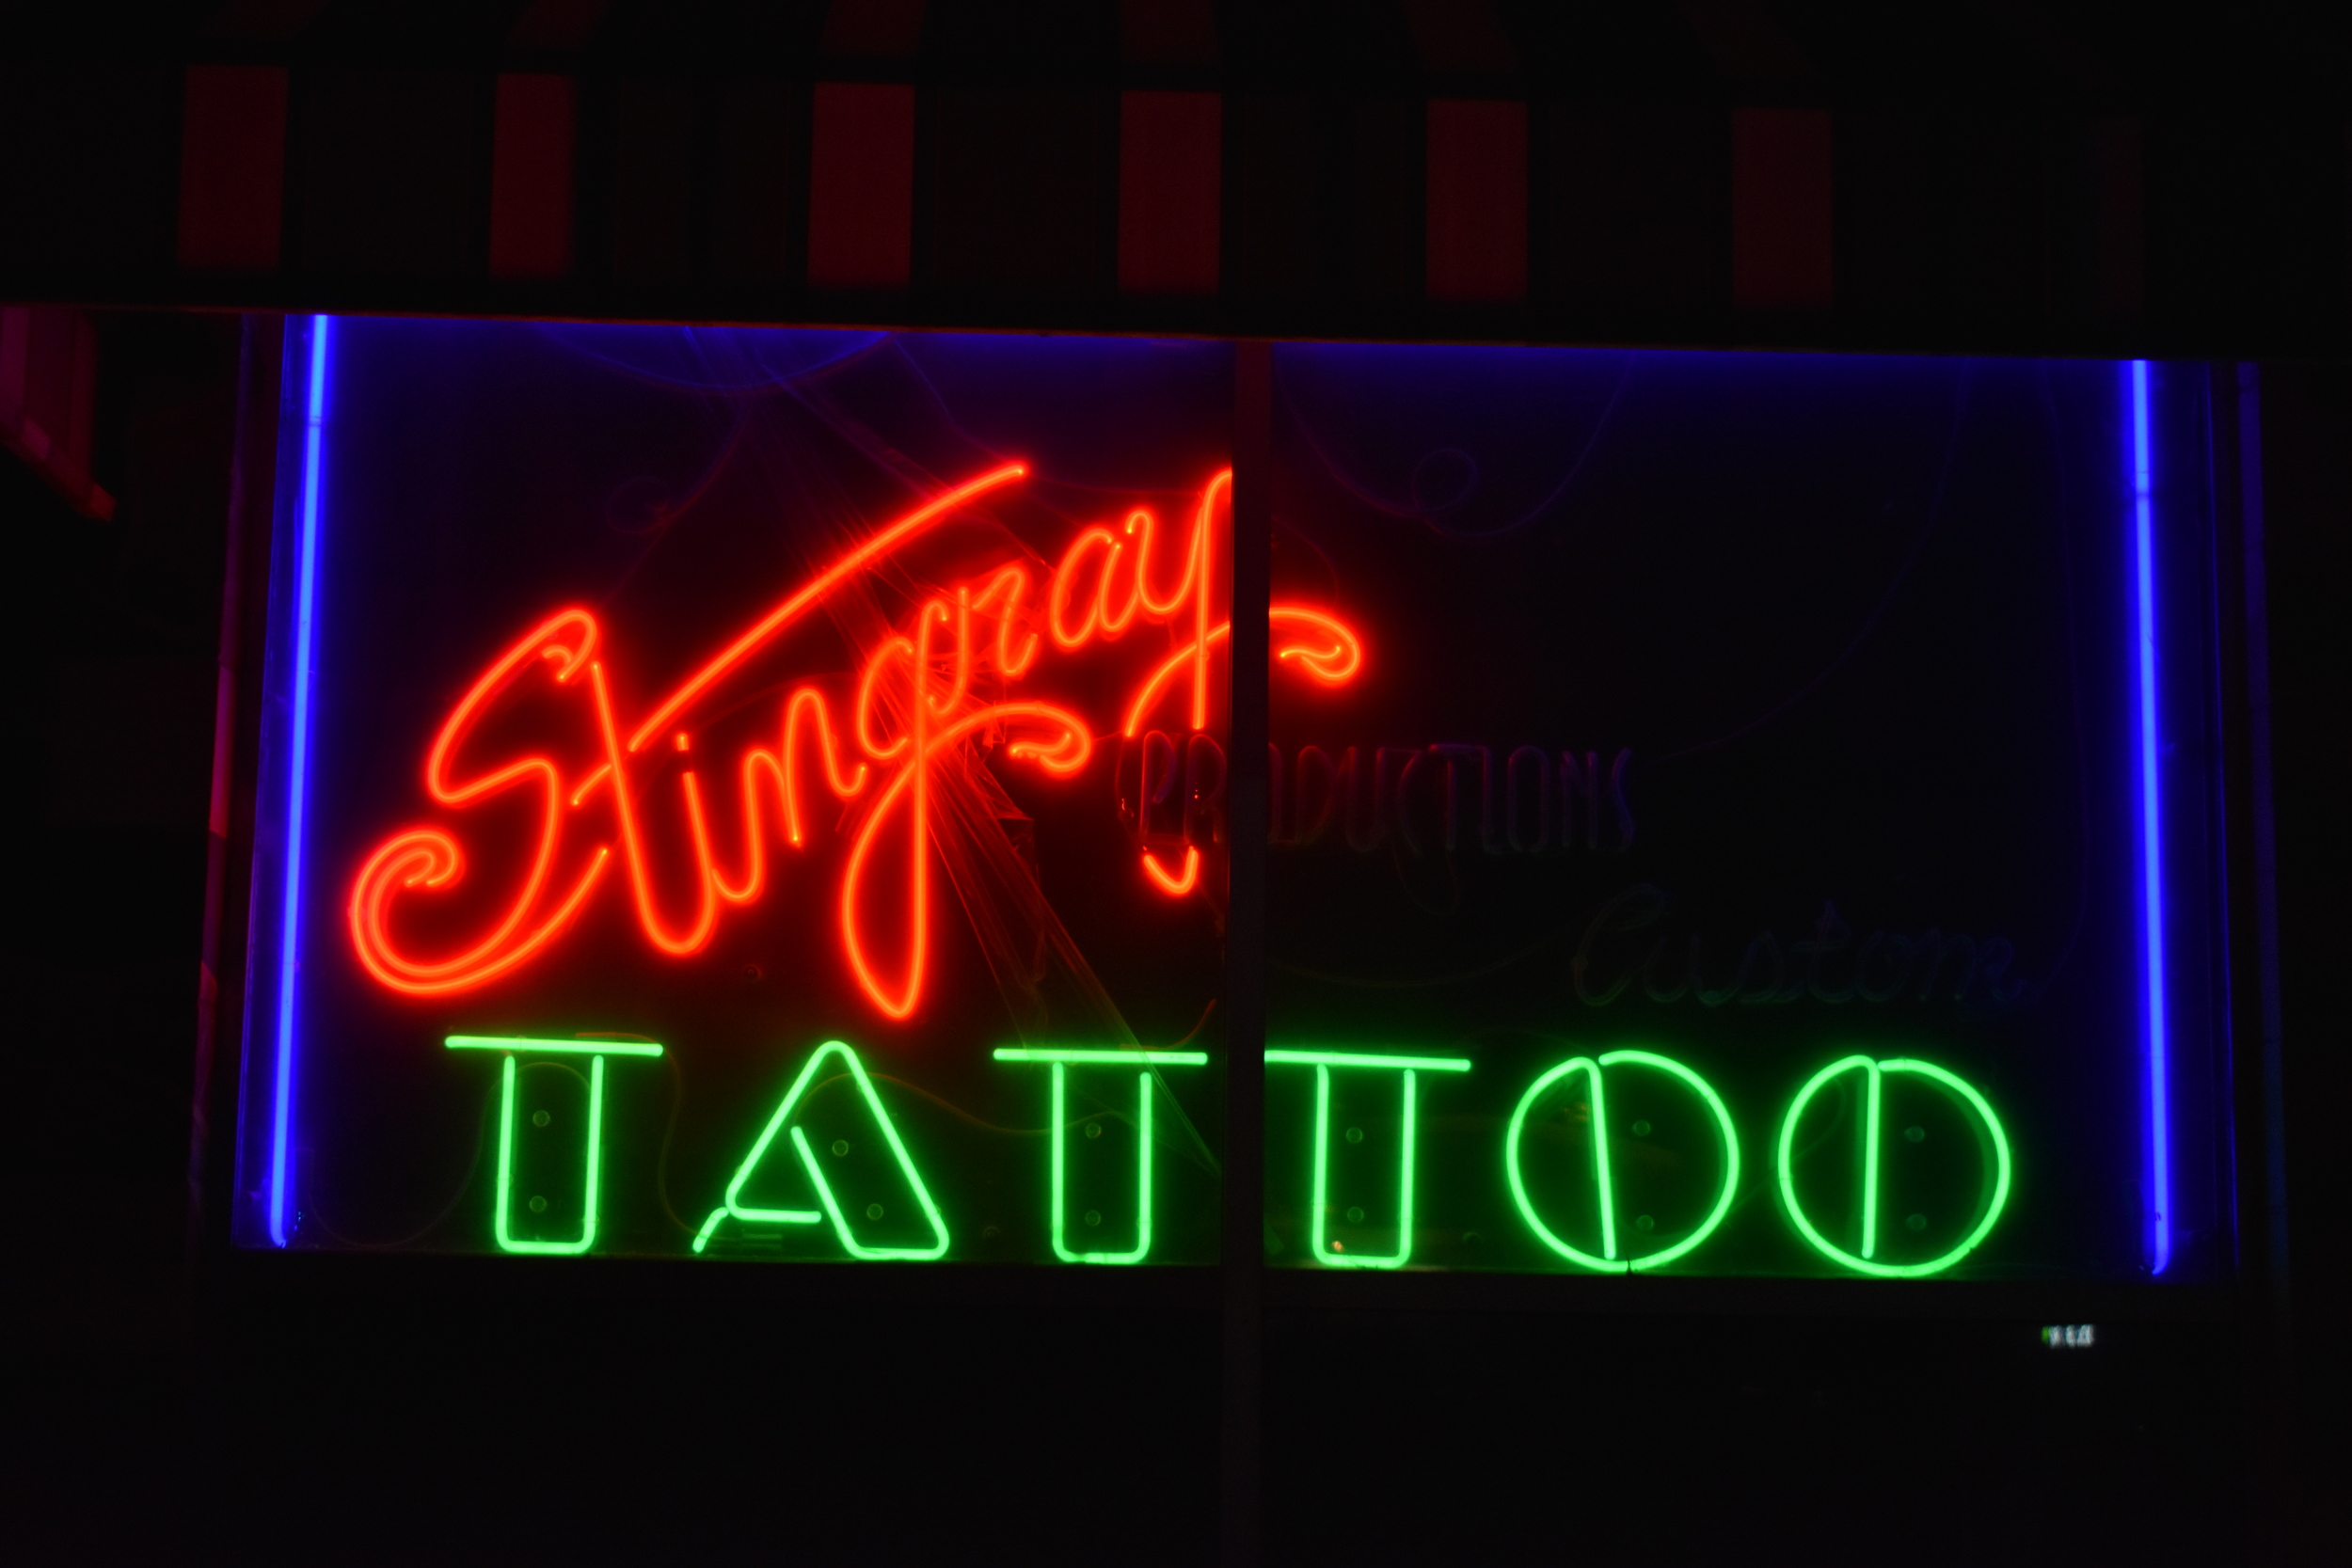 Stingray Tattoo window signs, Reno, Nevada